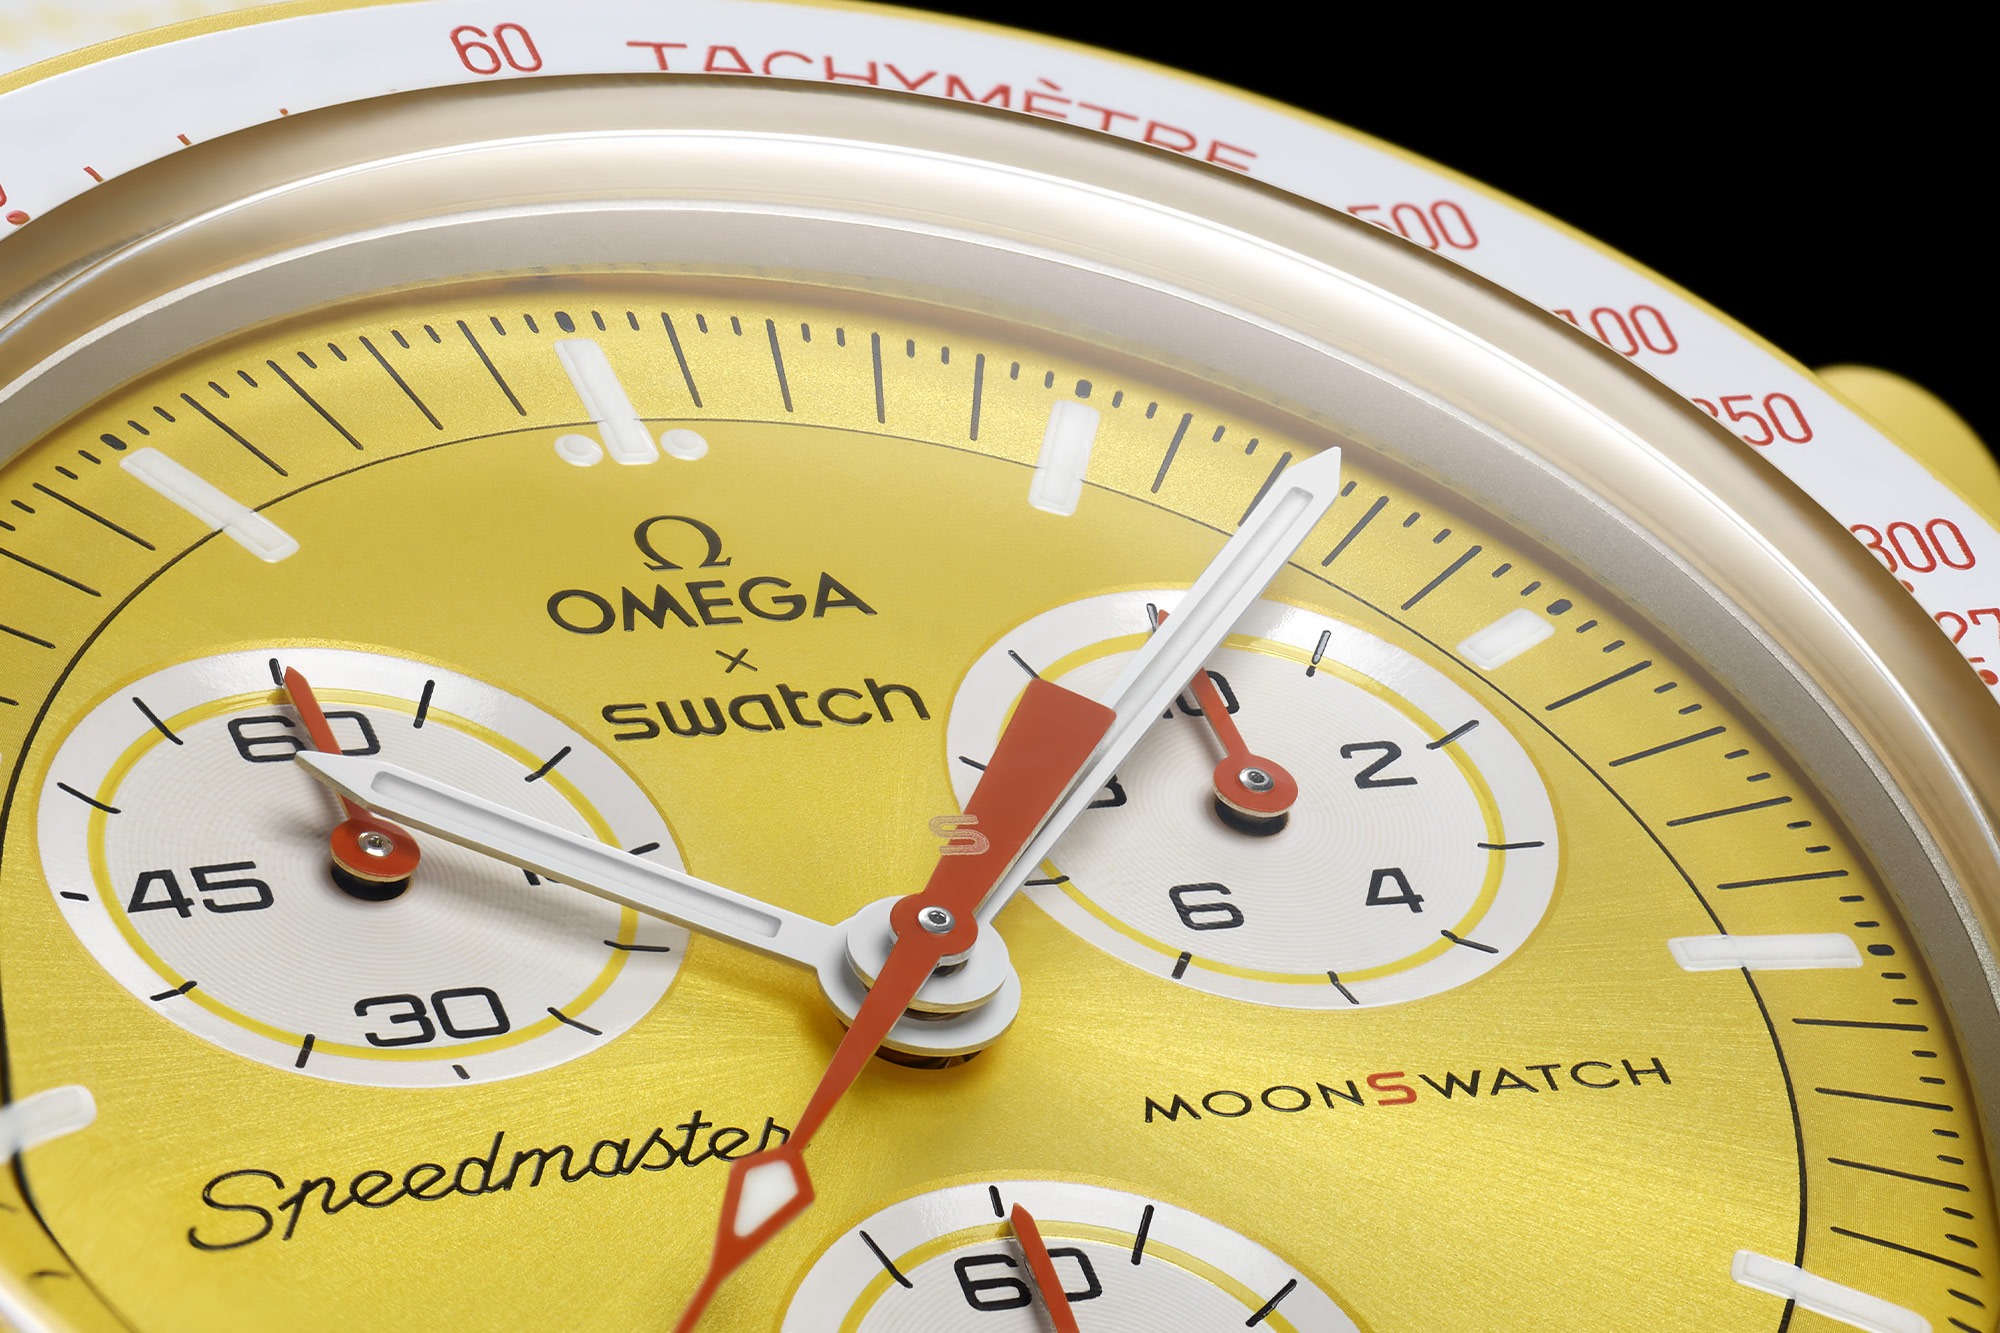 Omega X Swatch Moonswatch Bioceramic